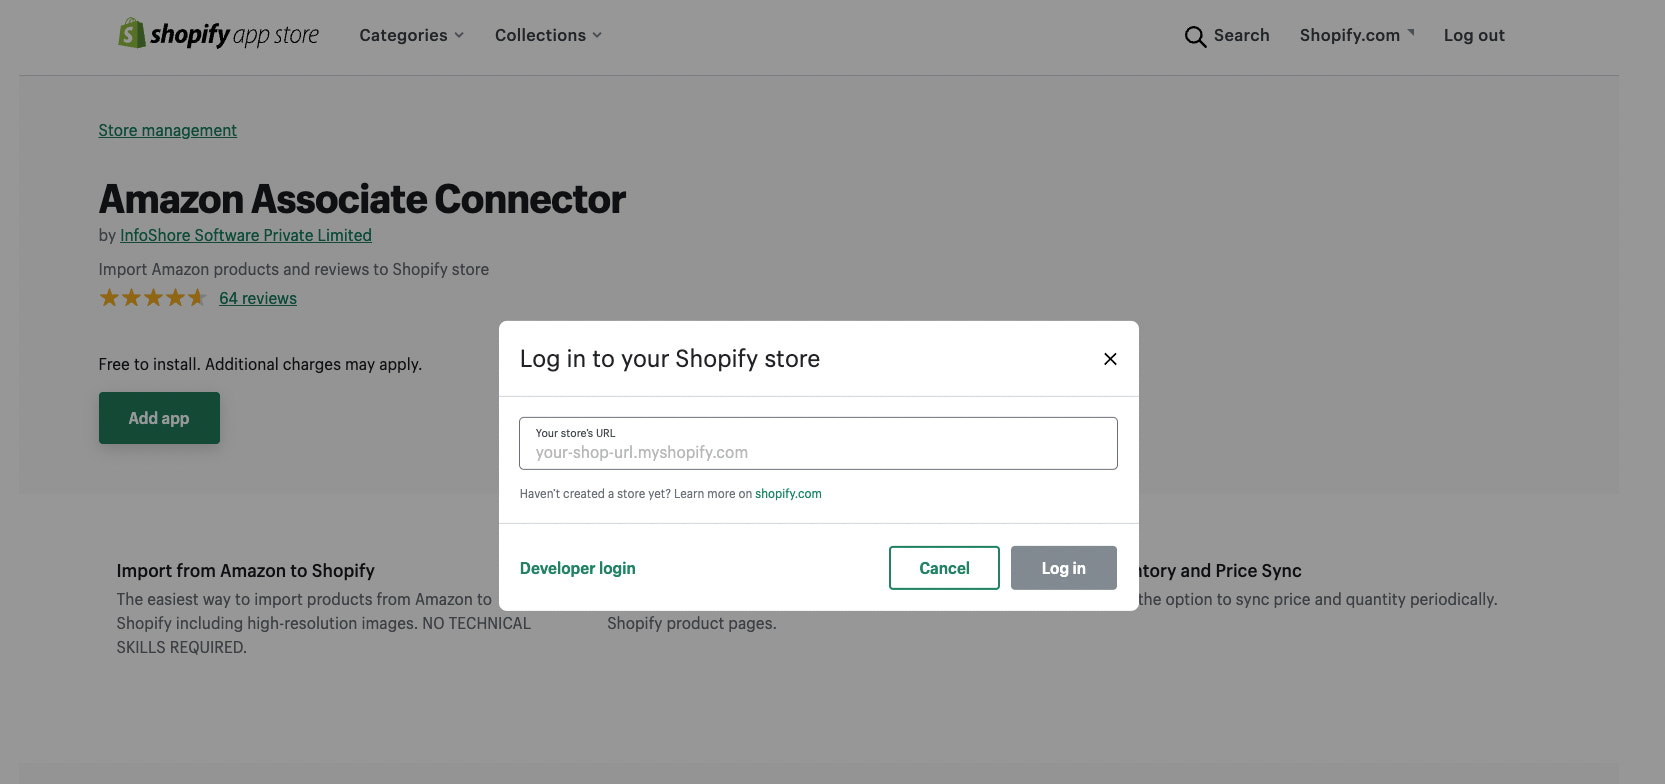 Amazon Associate Connector app